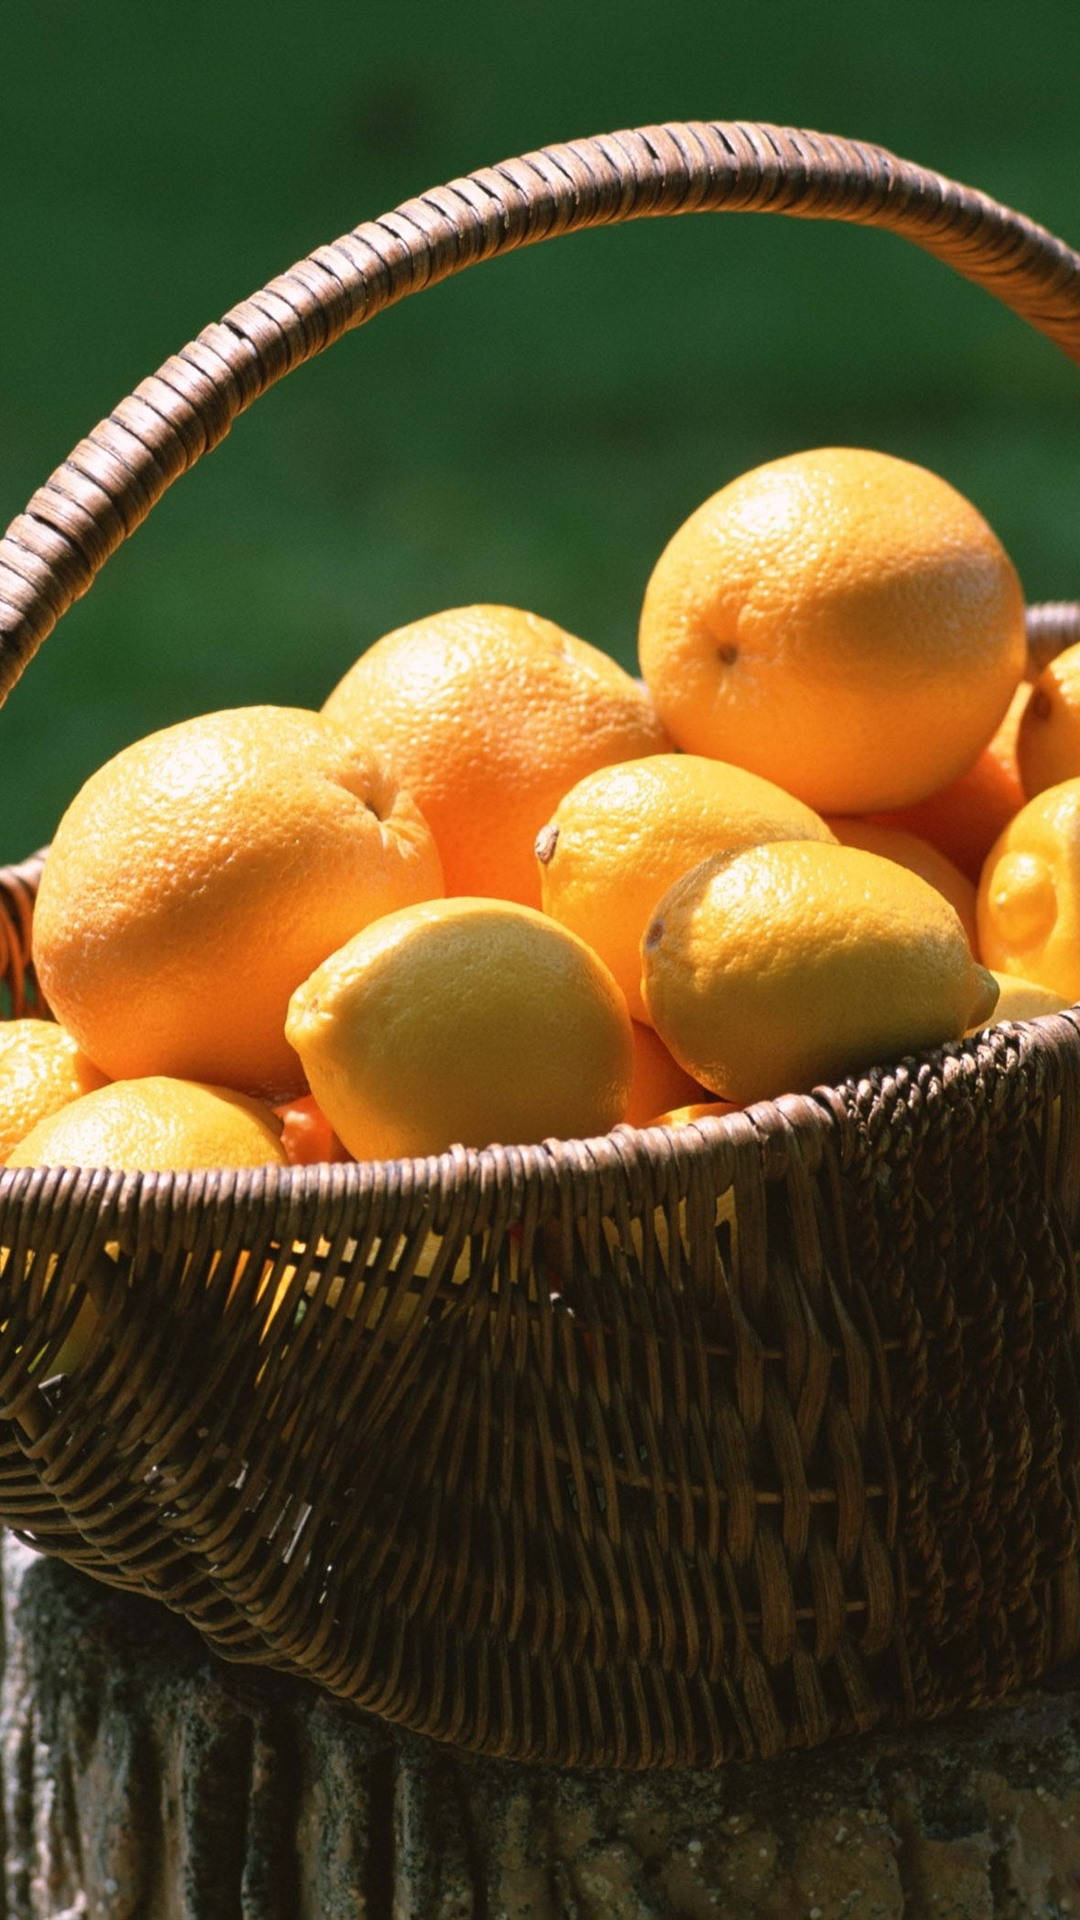 Oranges And Lemons In A Basket